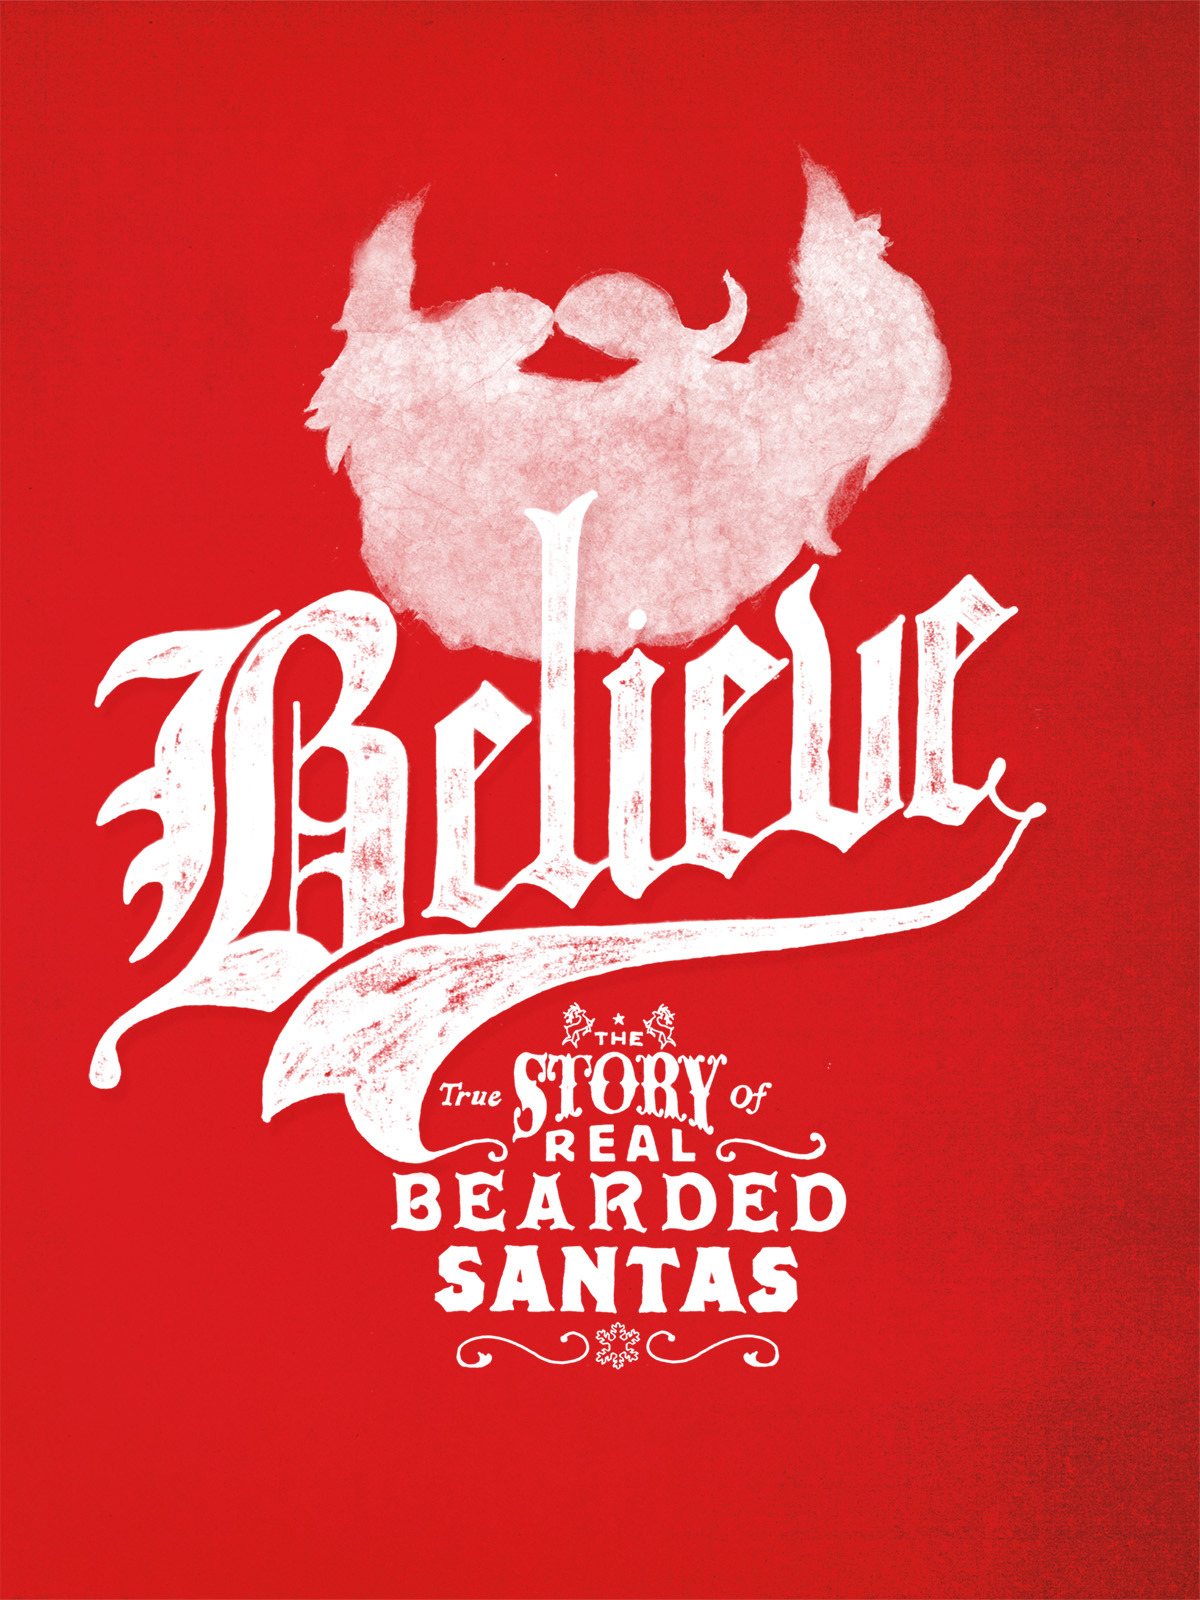 Believe: The True Story of Real Bearded Santas documentary